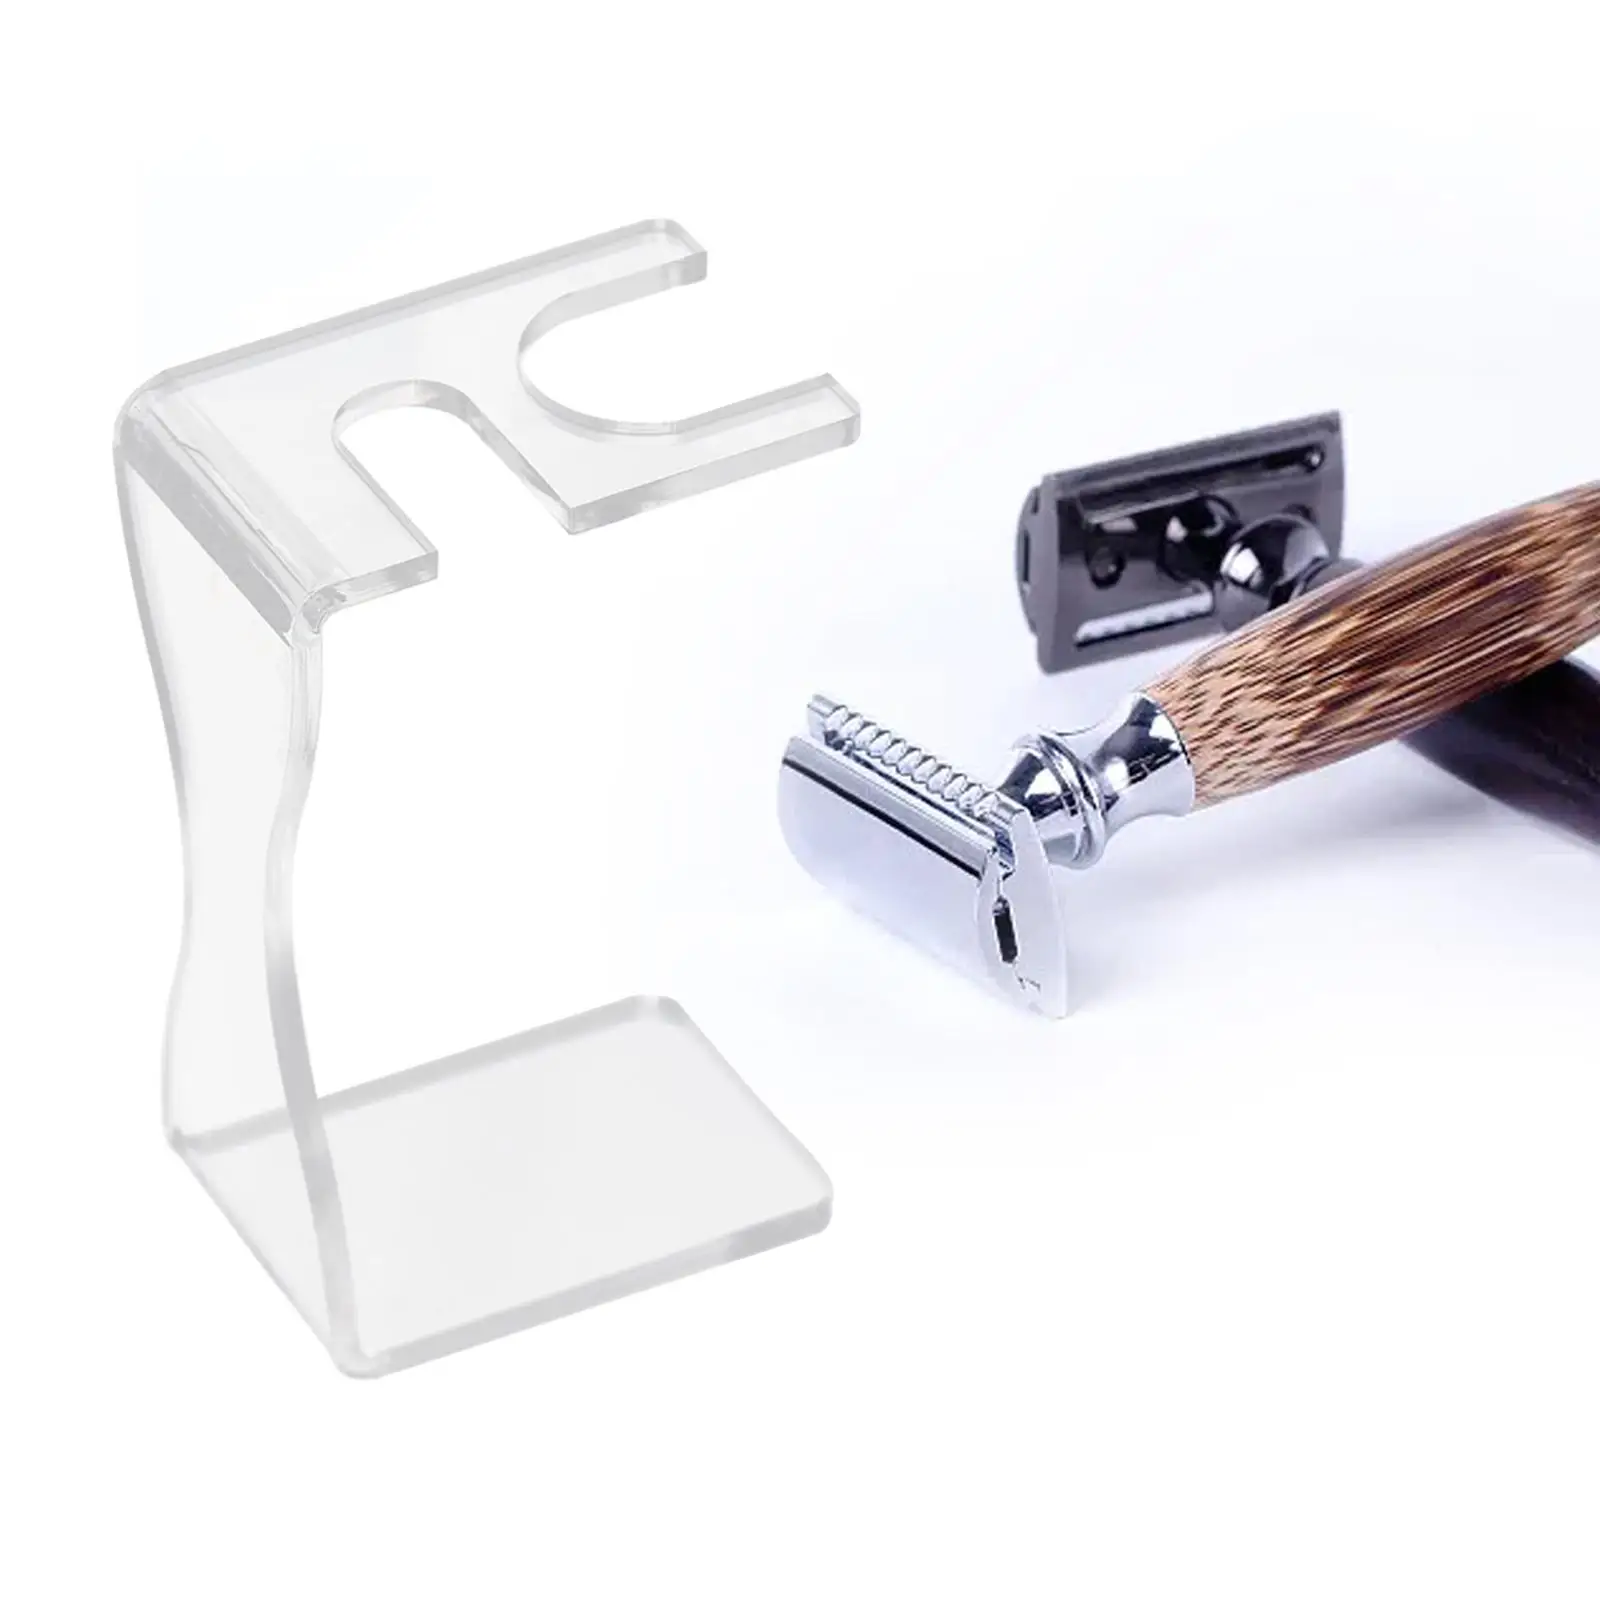 Manual Shaver Stand Holder Rack Multifunctional Functional Anti Slip Base Durable Height 11.2cm for Wet Shaving Enthusiastic